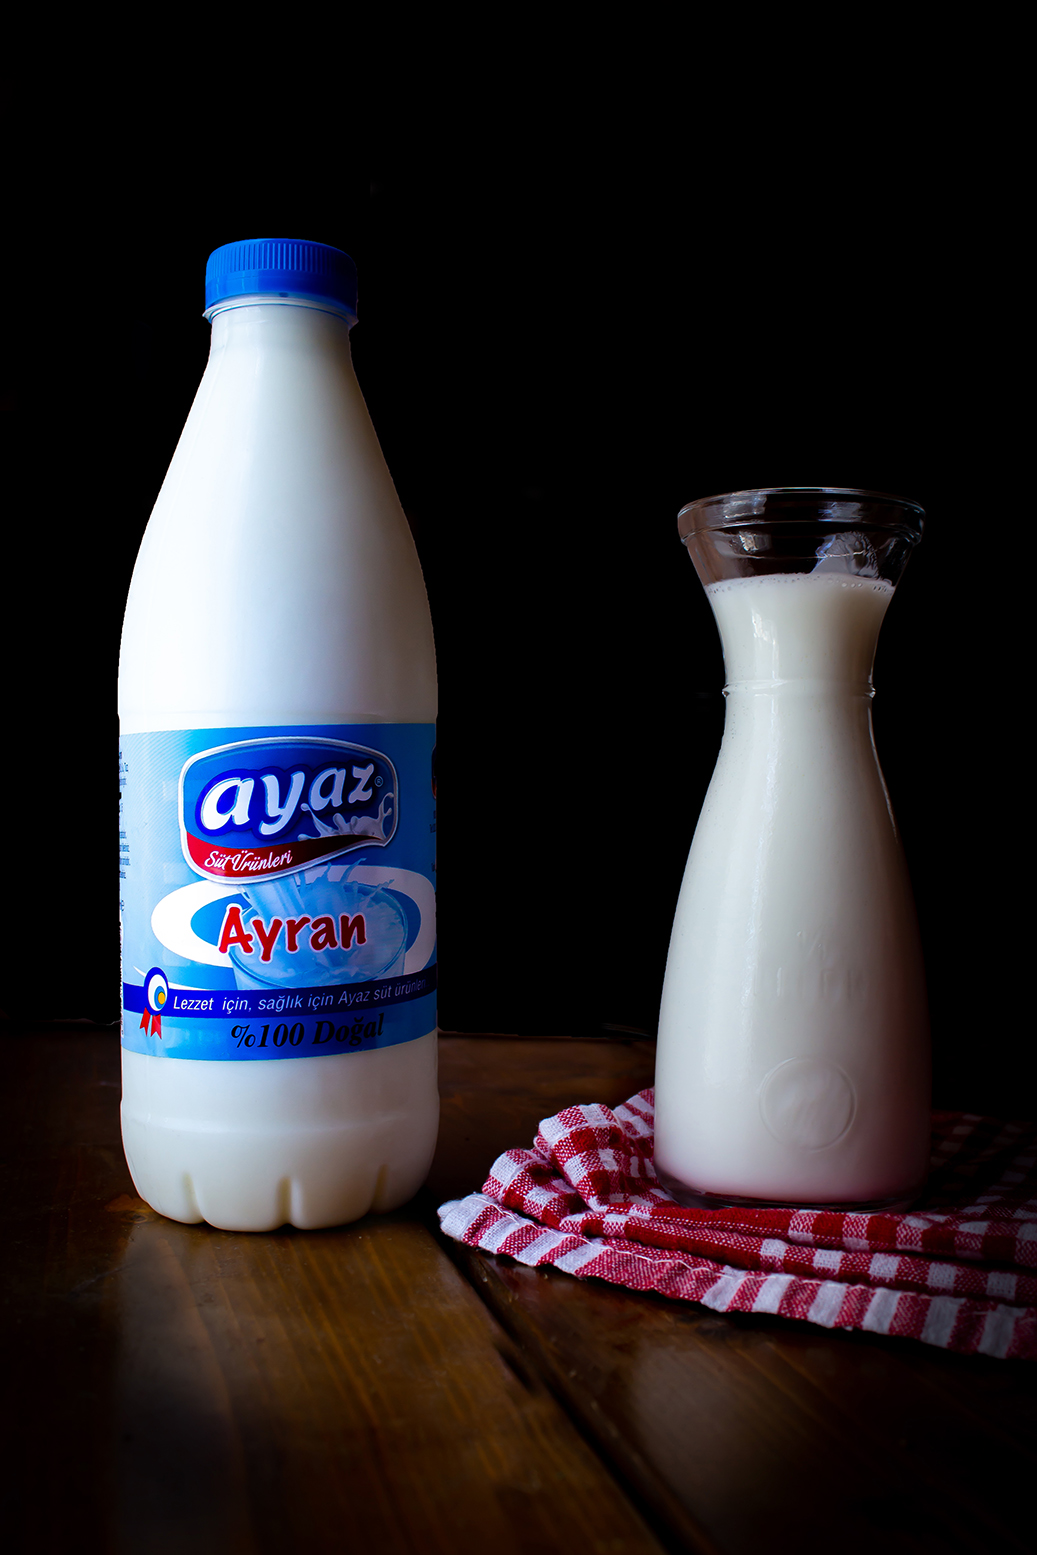 Promising Ayaz Milk Producer Company